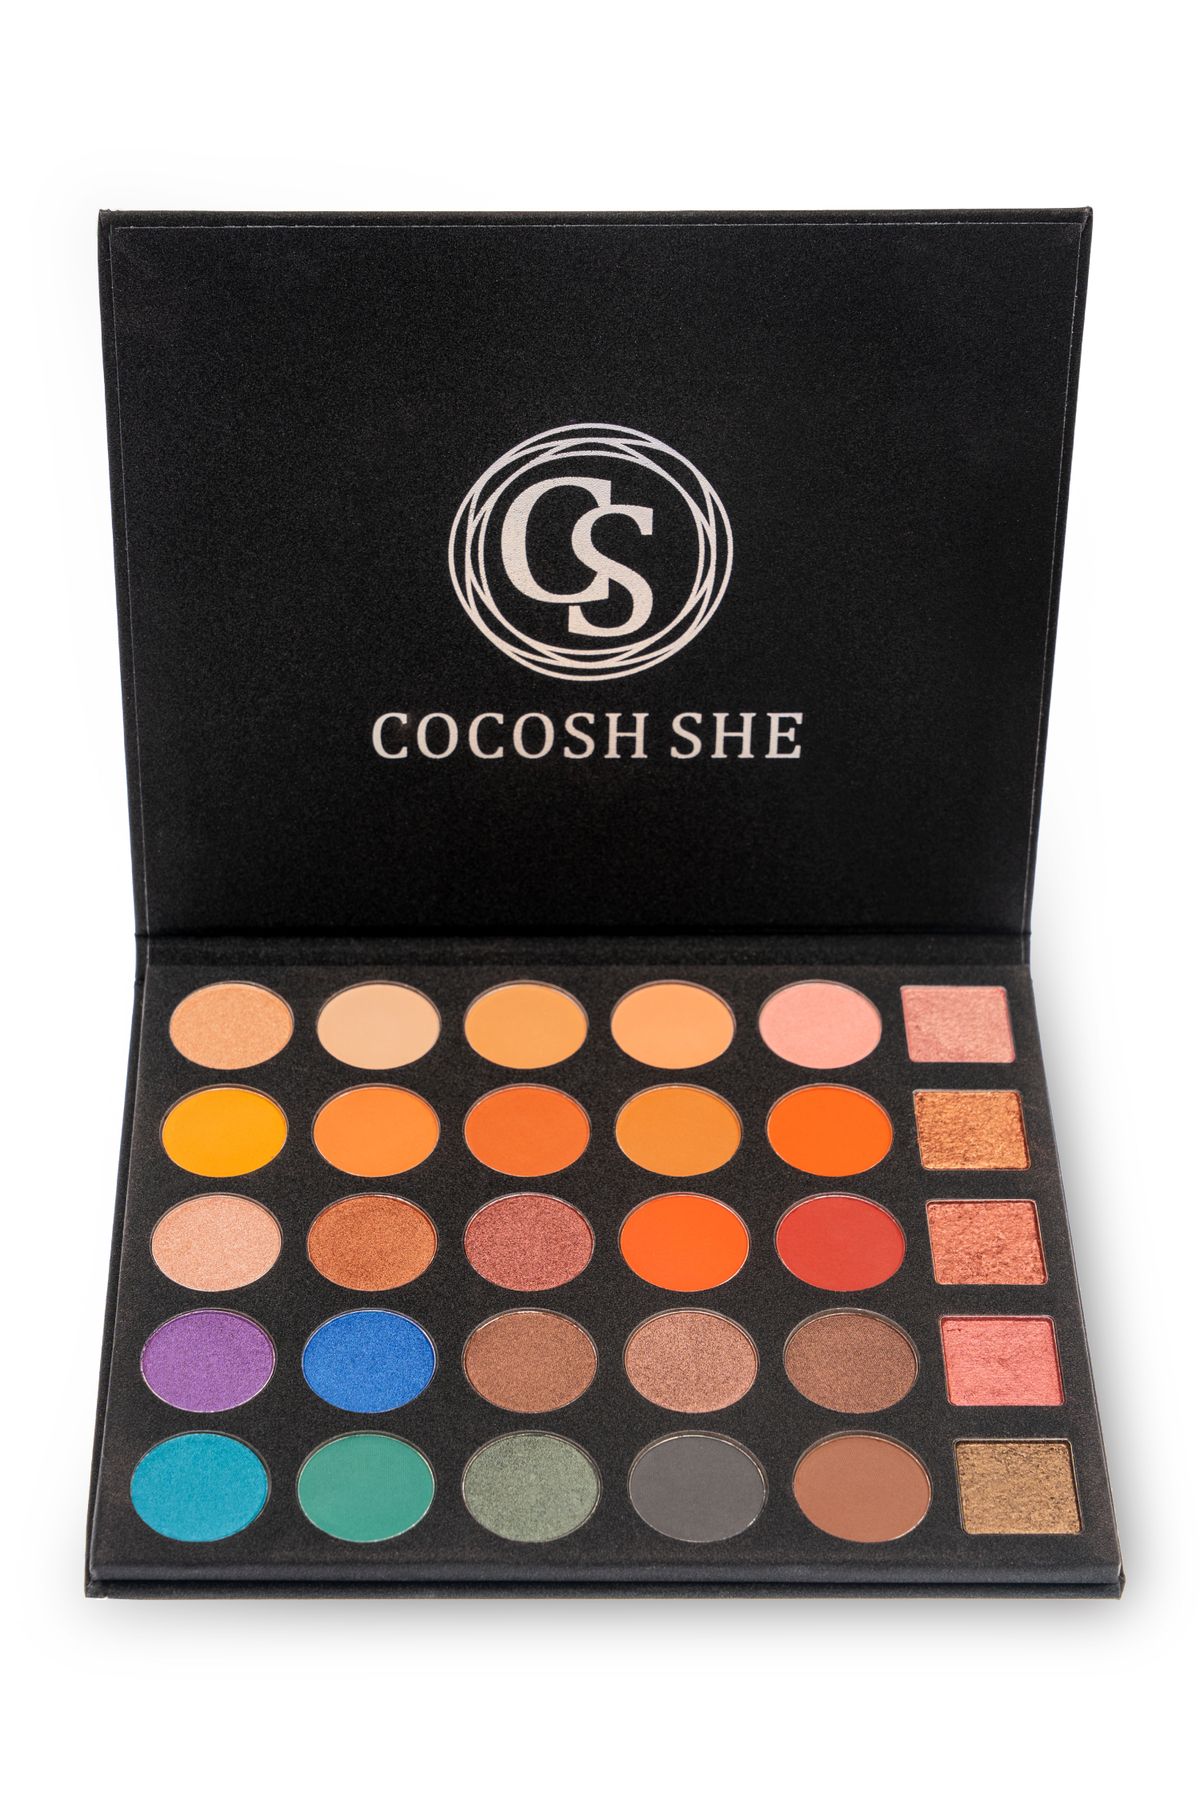 Cocosh She Excellent 30 Renk Göz Far Paleti, Yüksek Pigmentasyon, Topaklanmaz, Kolay Dağılım